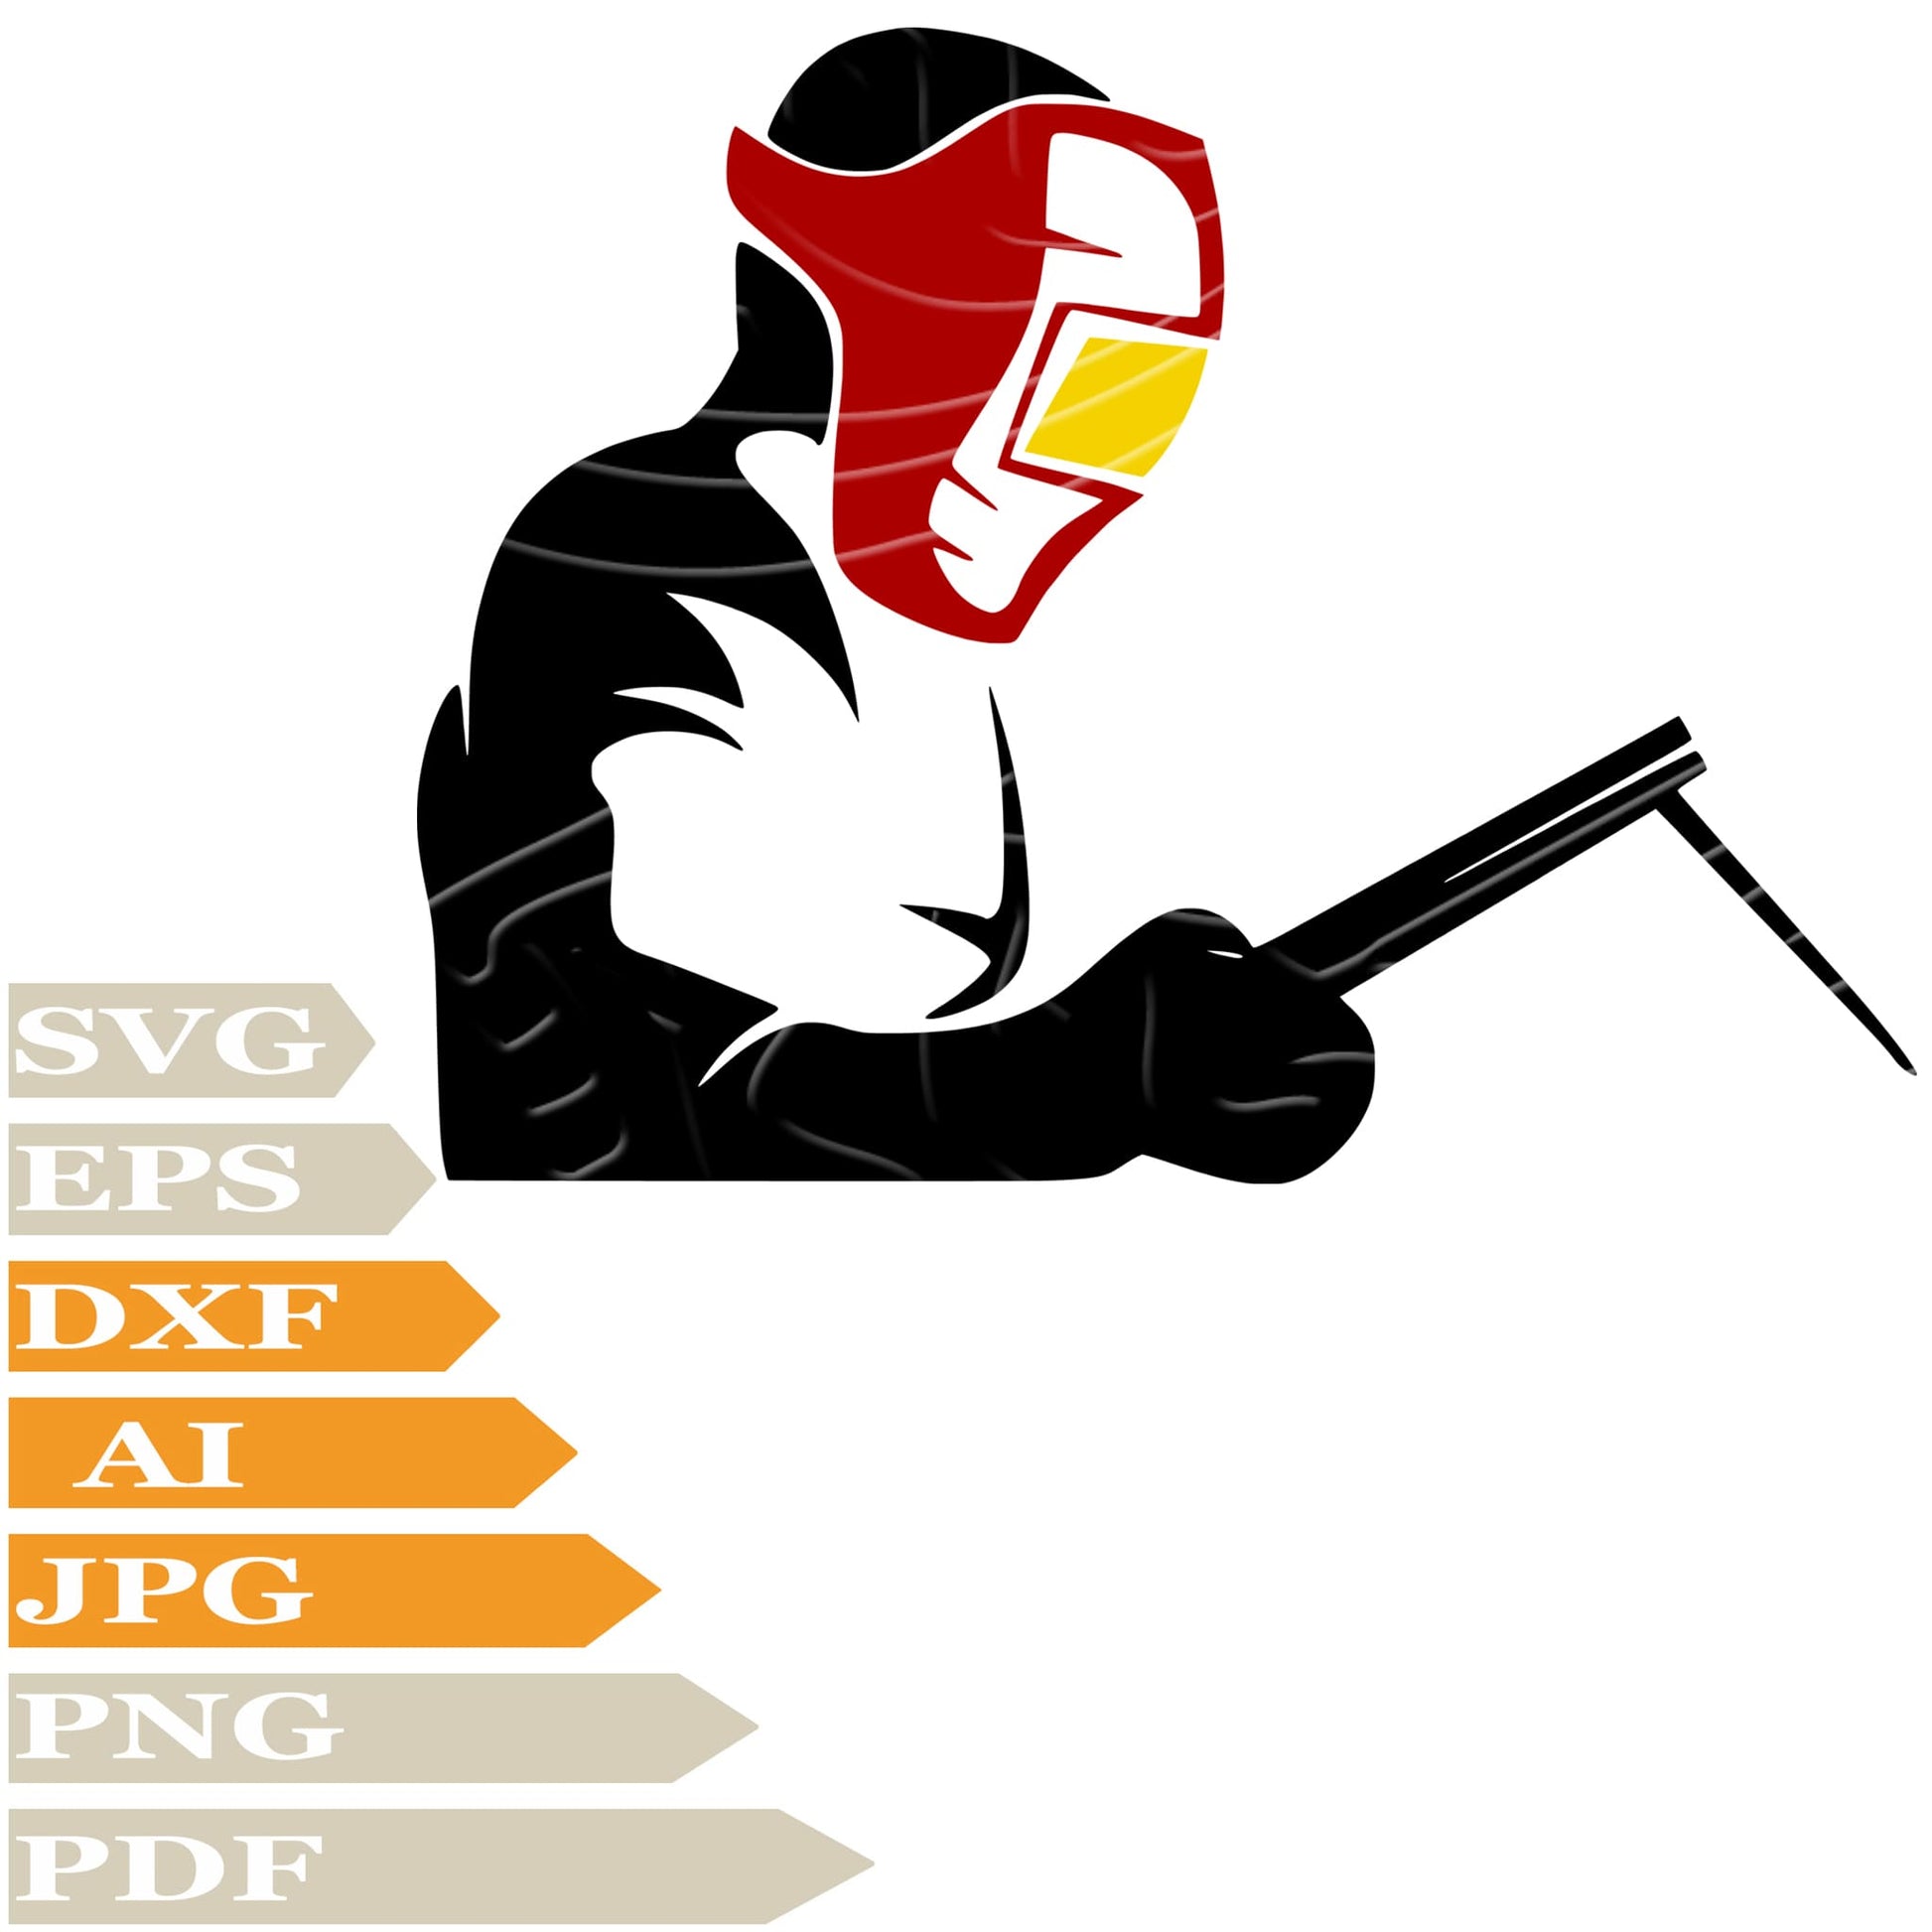 Welder SVG File, Welding SVG Design, Welder SVG Cricut, American Welder Digital Vector, PNG, Image Cut, Clipart, Cut File, Print, Decal, Shirt, Silhouette